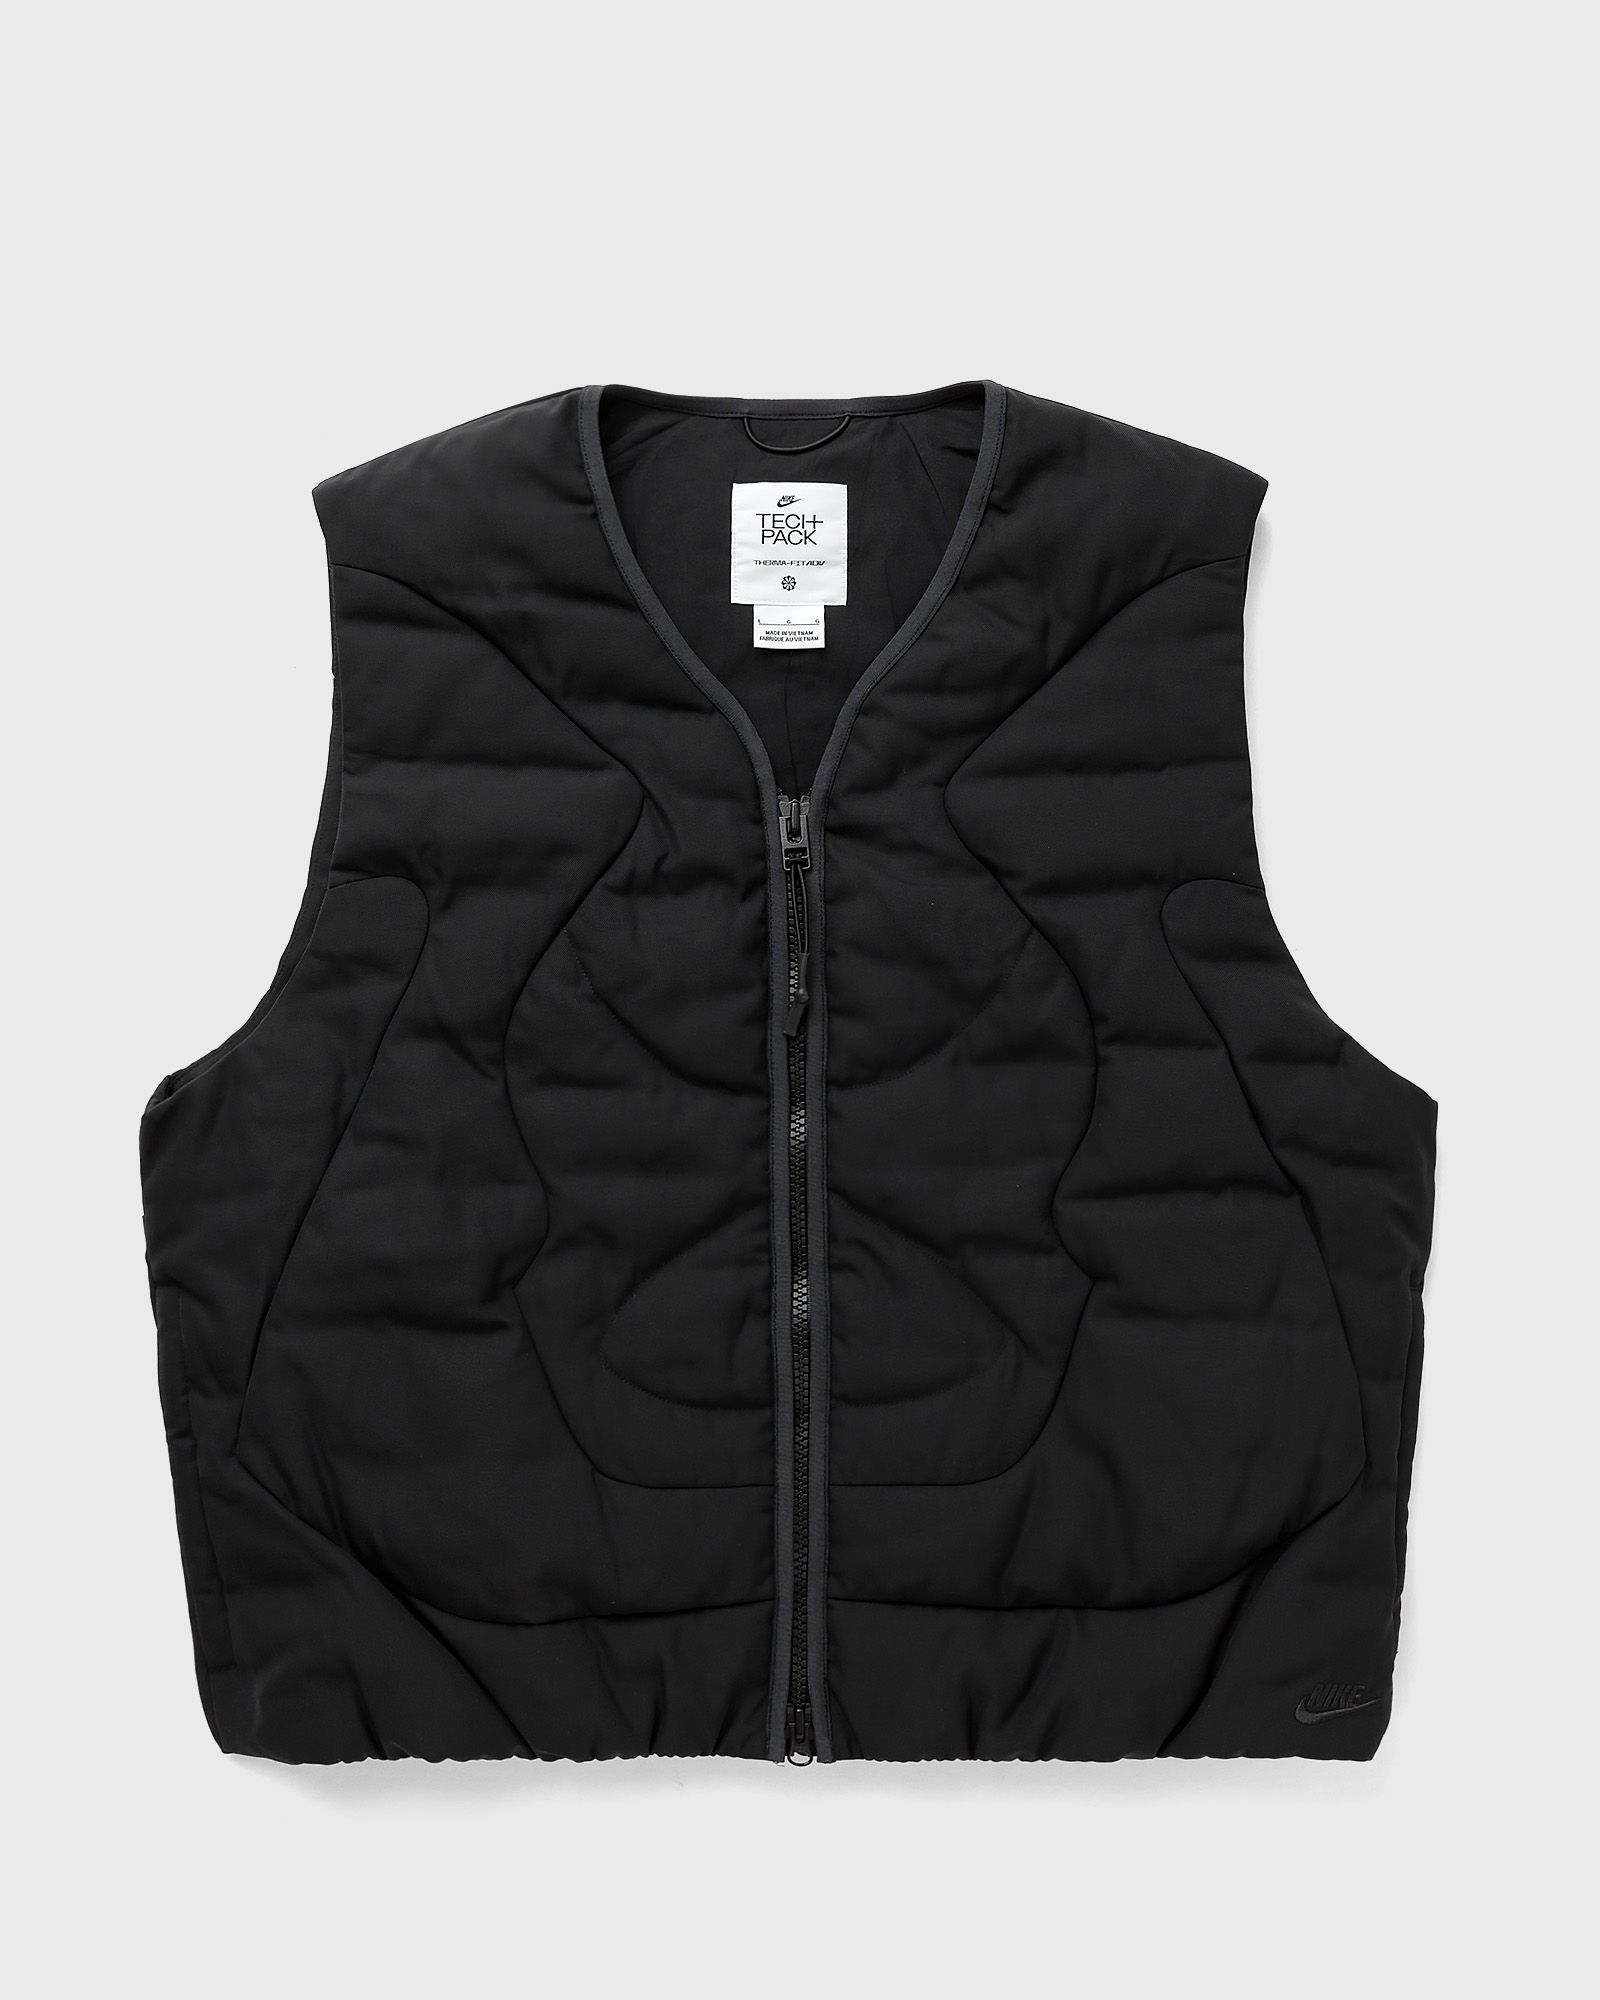 Nike - tech pack therma fit adv insulated atlas vest men vests black in größe:xl